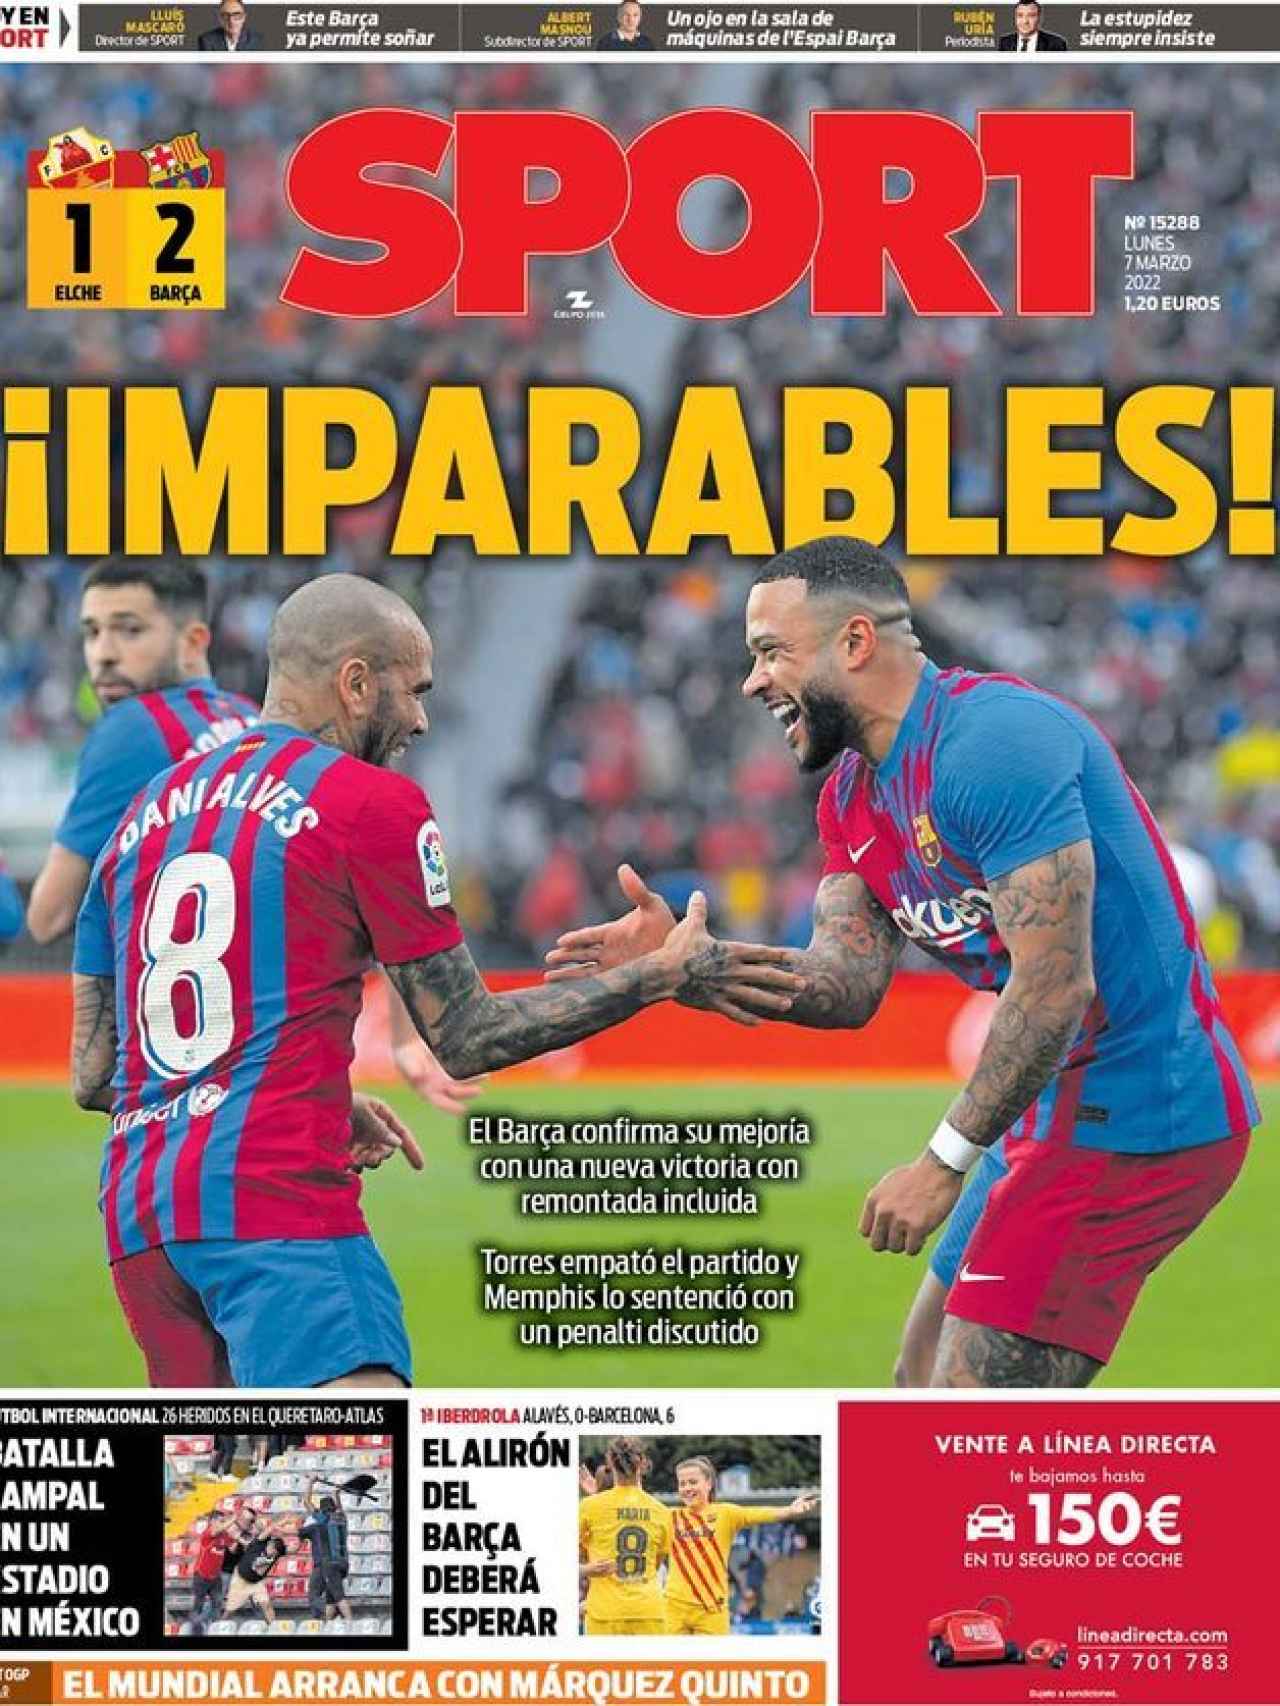 La portada del diario SPORT (07/03/2022)